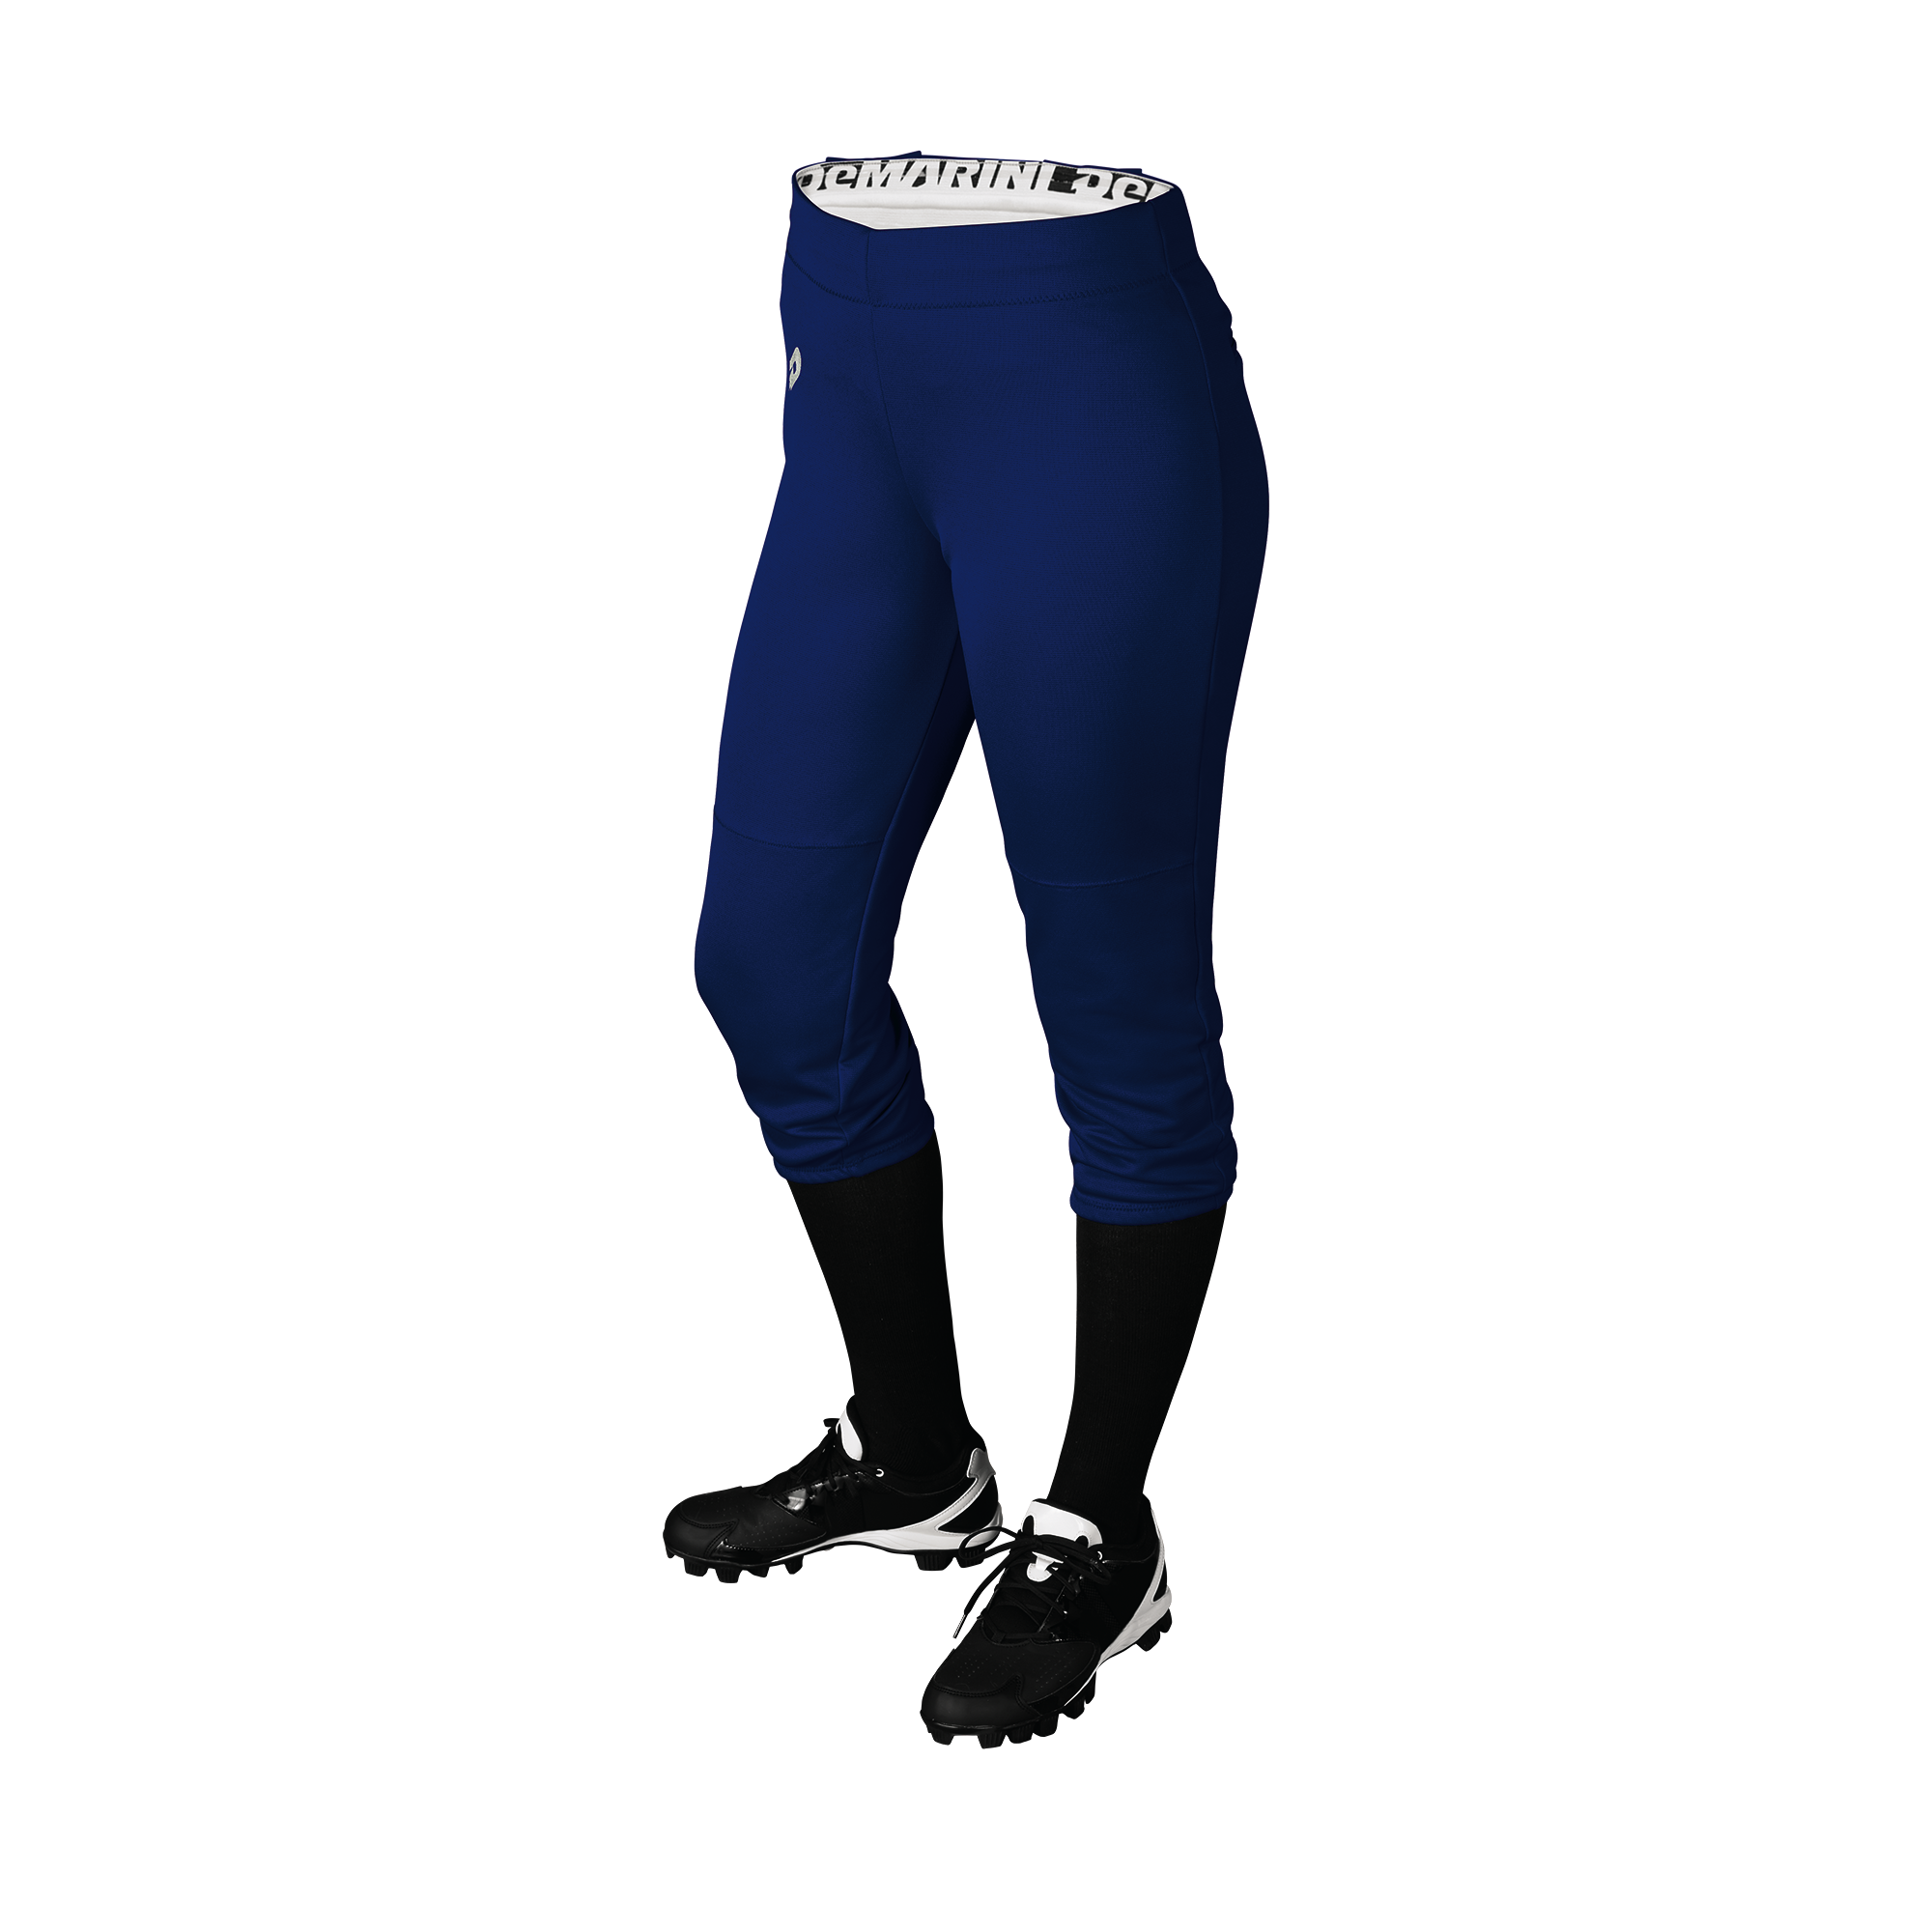 Demarini Sleek Girls Medium Softball Pant